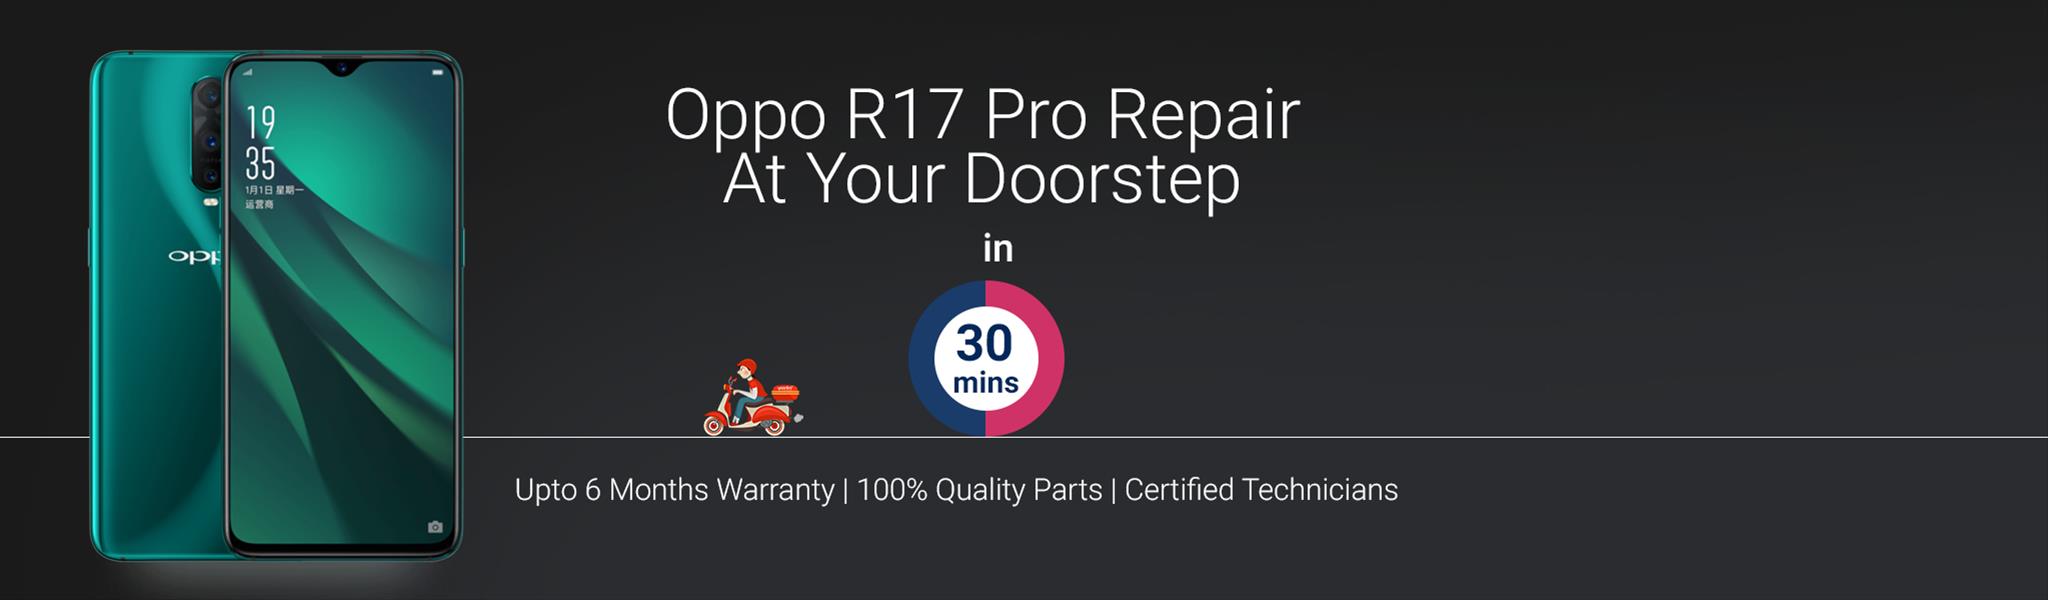 oppo-r17-pro-repair.jpg